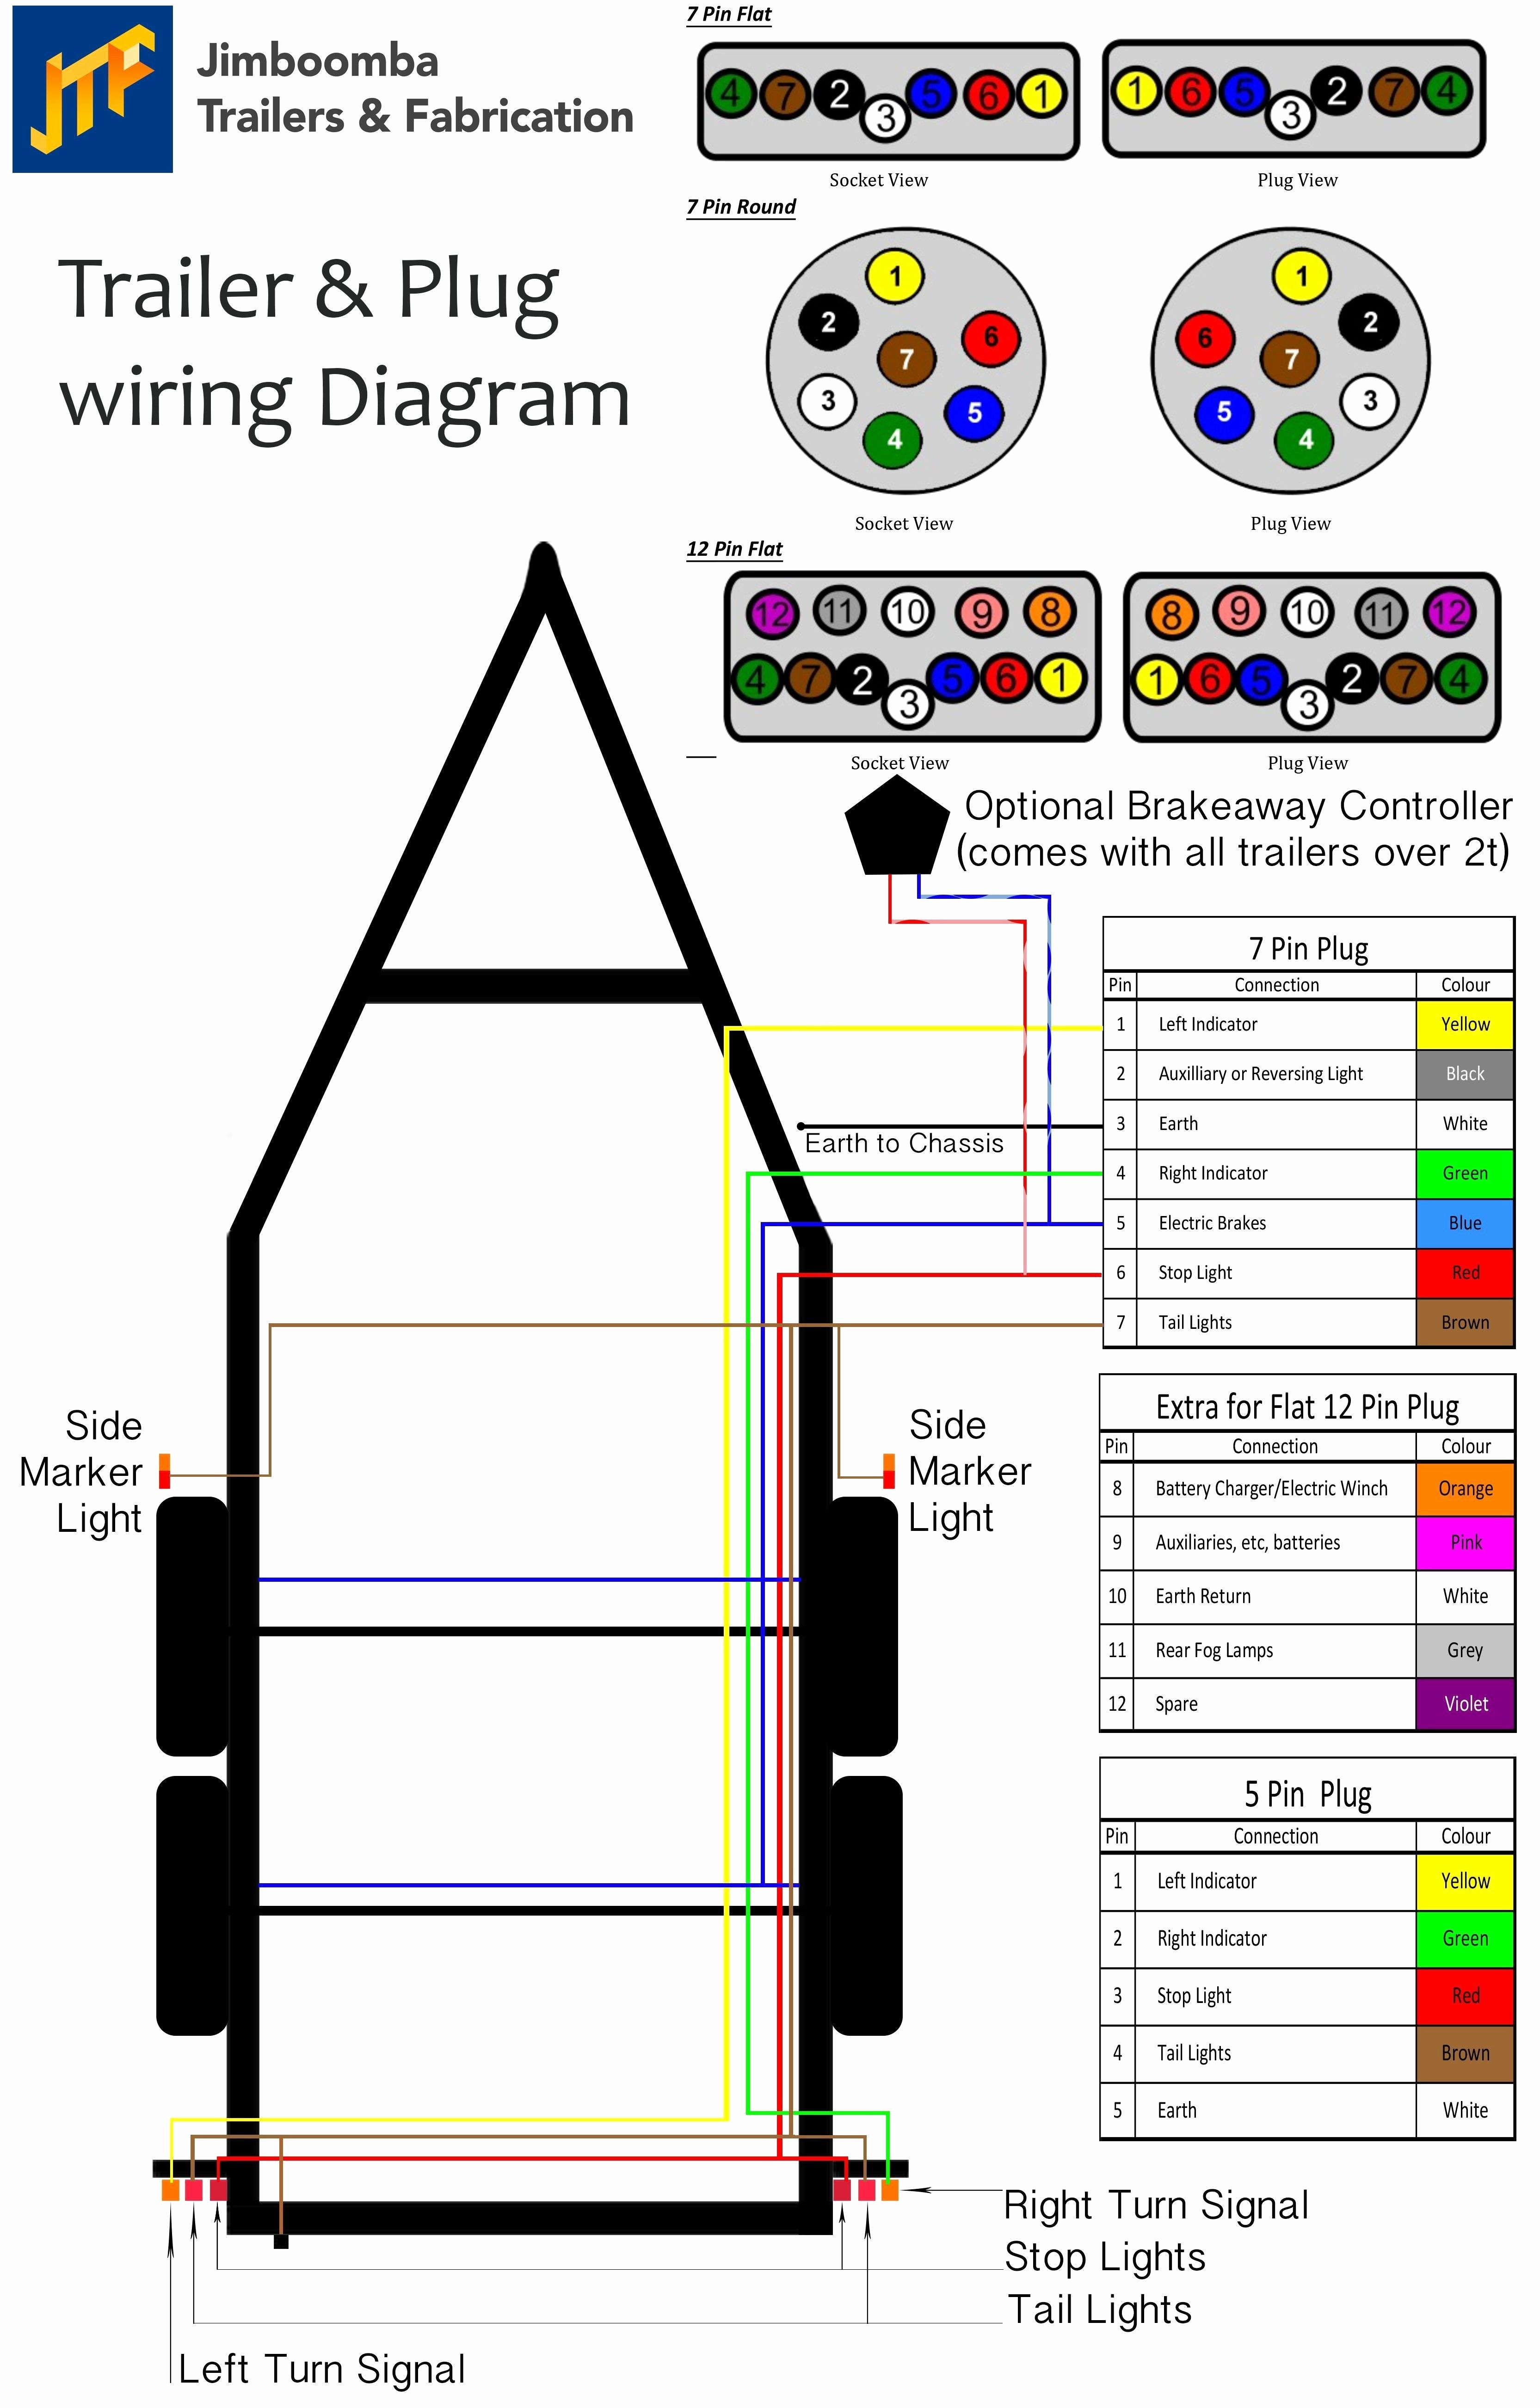 6 Way Plug Wiring Diagram | Wiring Library - 6 Pin To 7 Pin Trailer Adapter Wiring Diagram